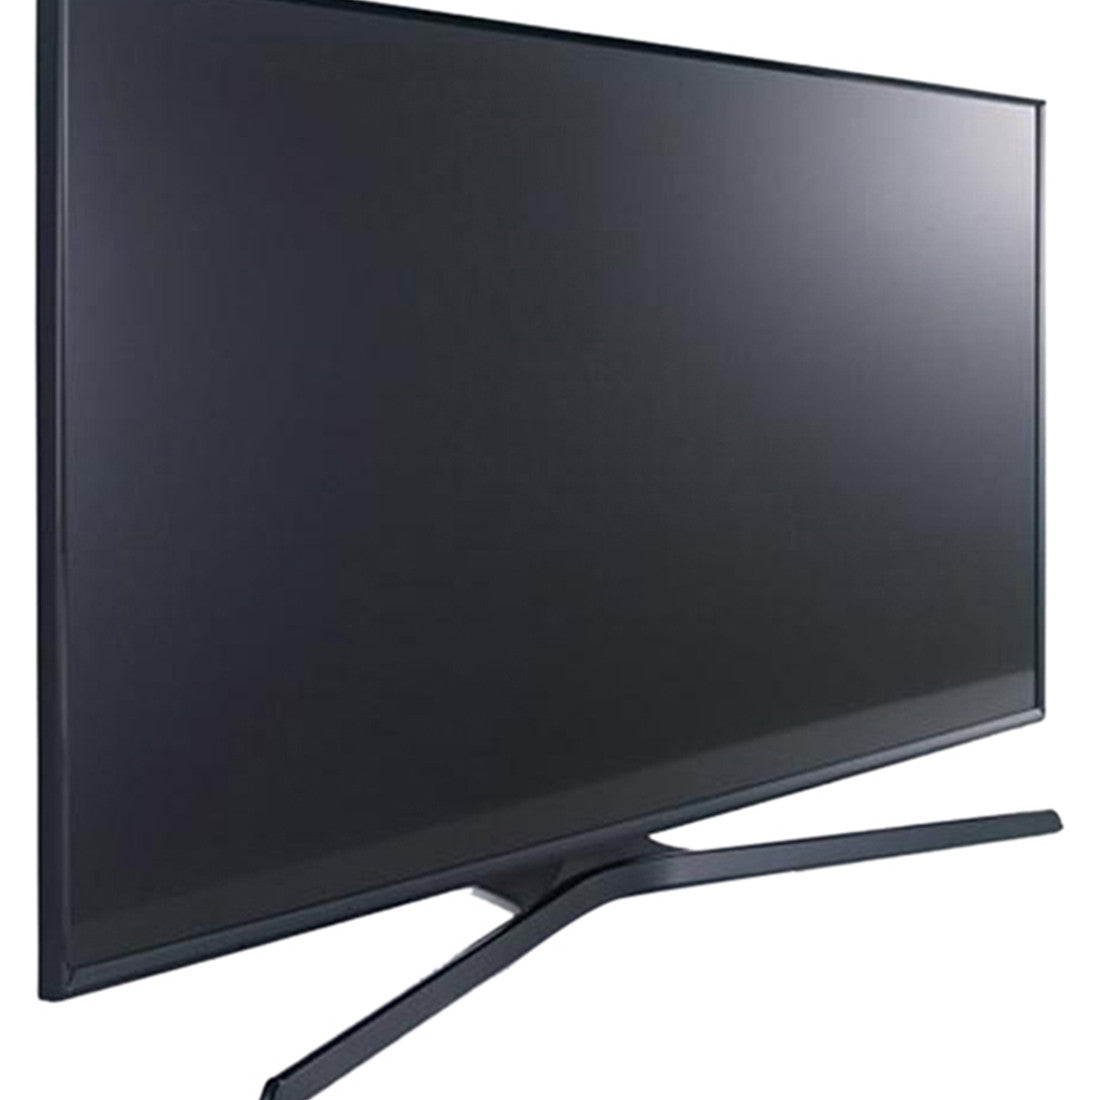 Samsung 40 inches Full HD LED Smart TV 40J5200